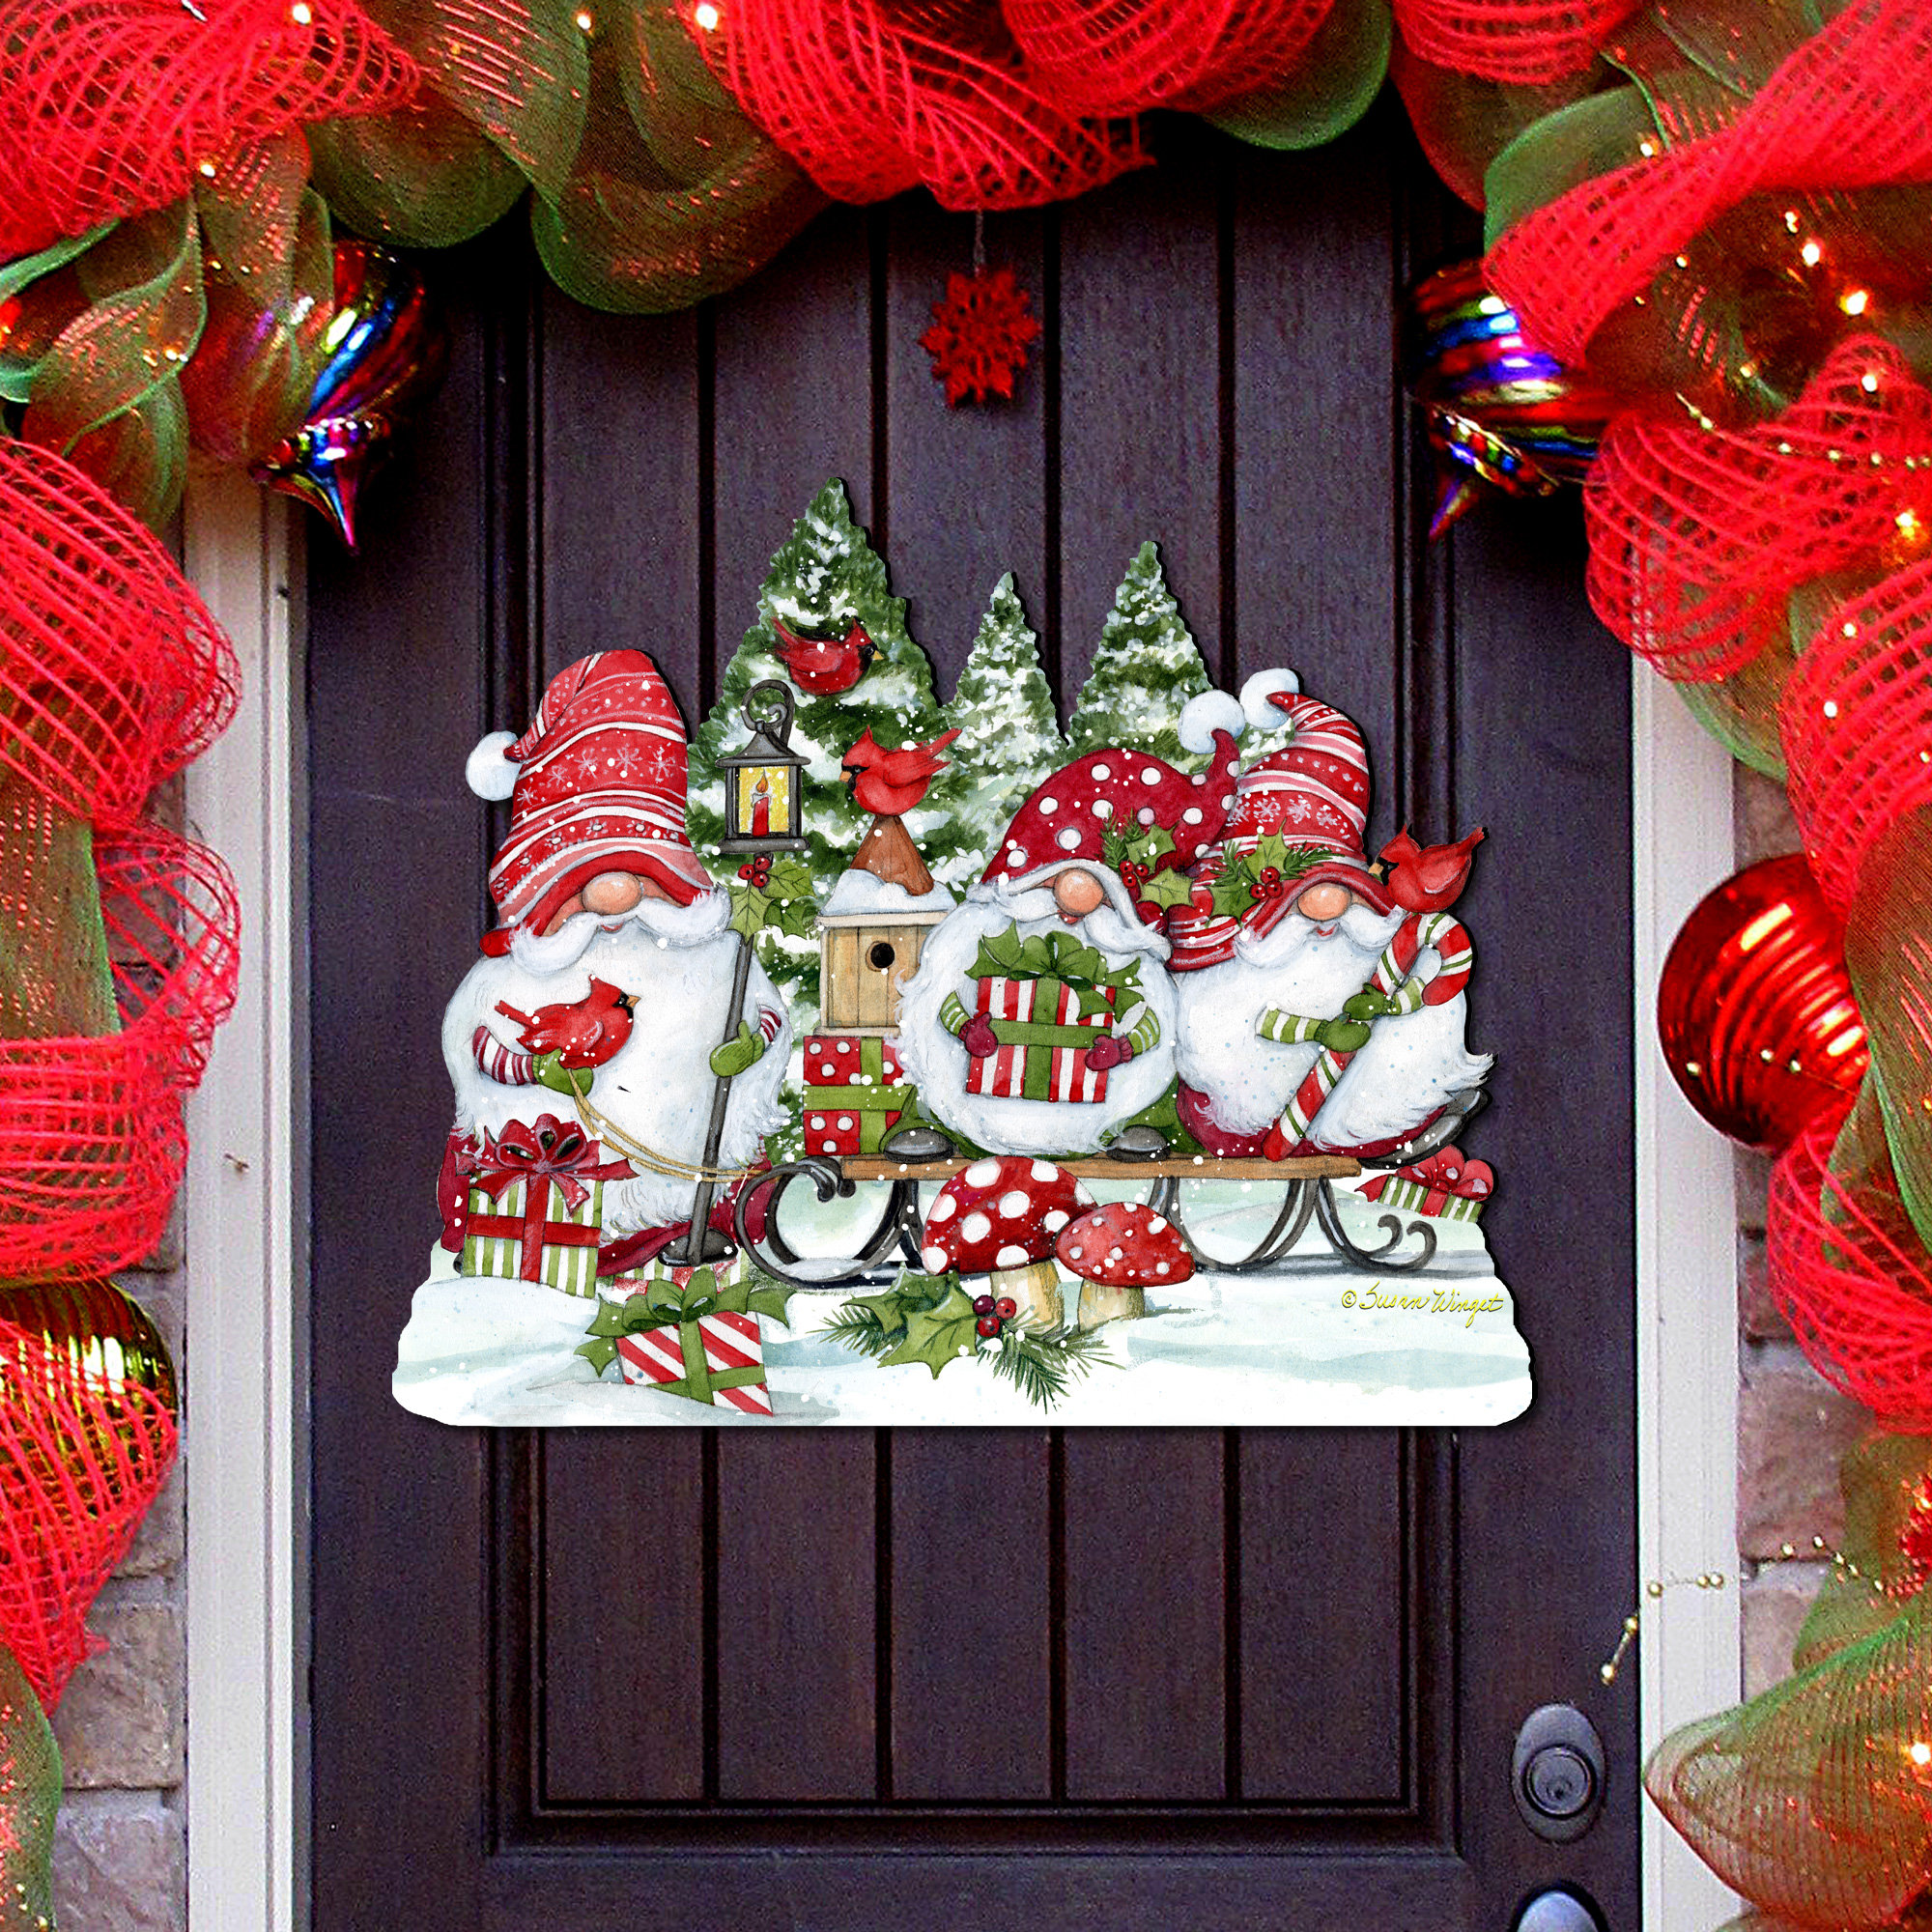 Dish Towel & Wash Cloth Neighbor Christmas Gift Idea - Saving Cent by Cent